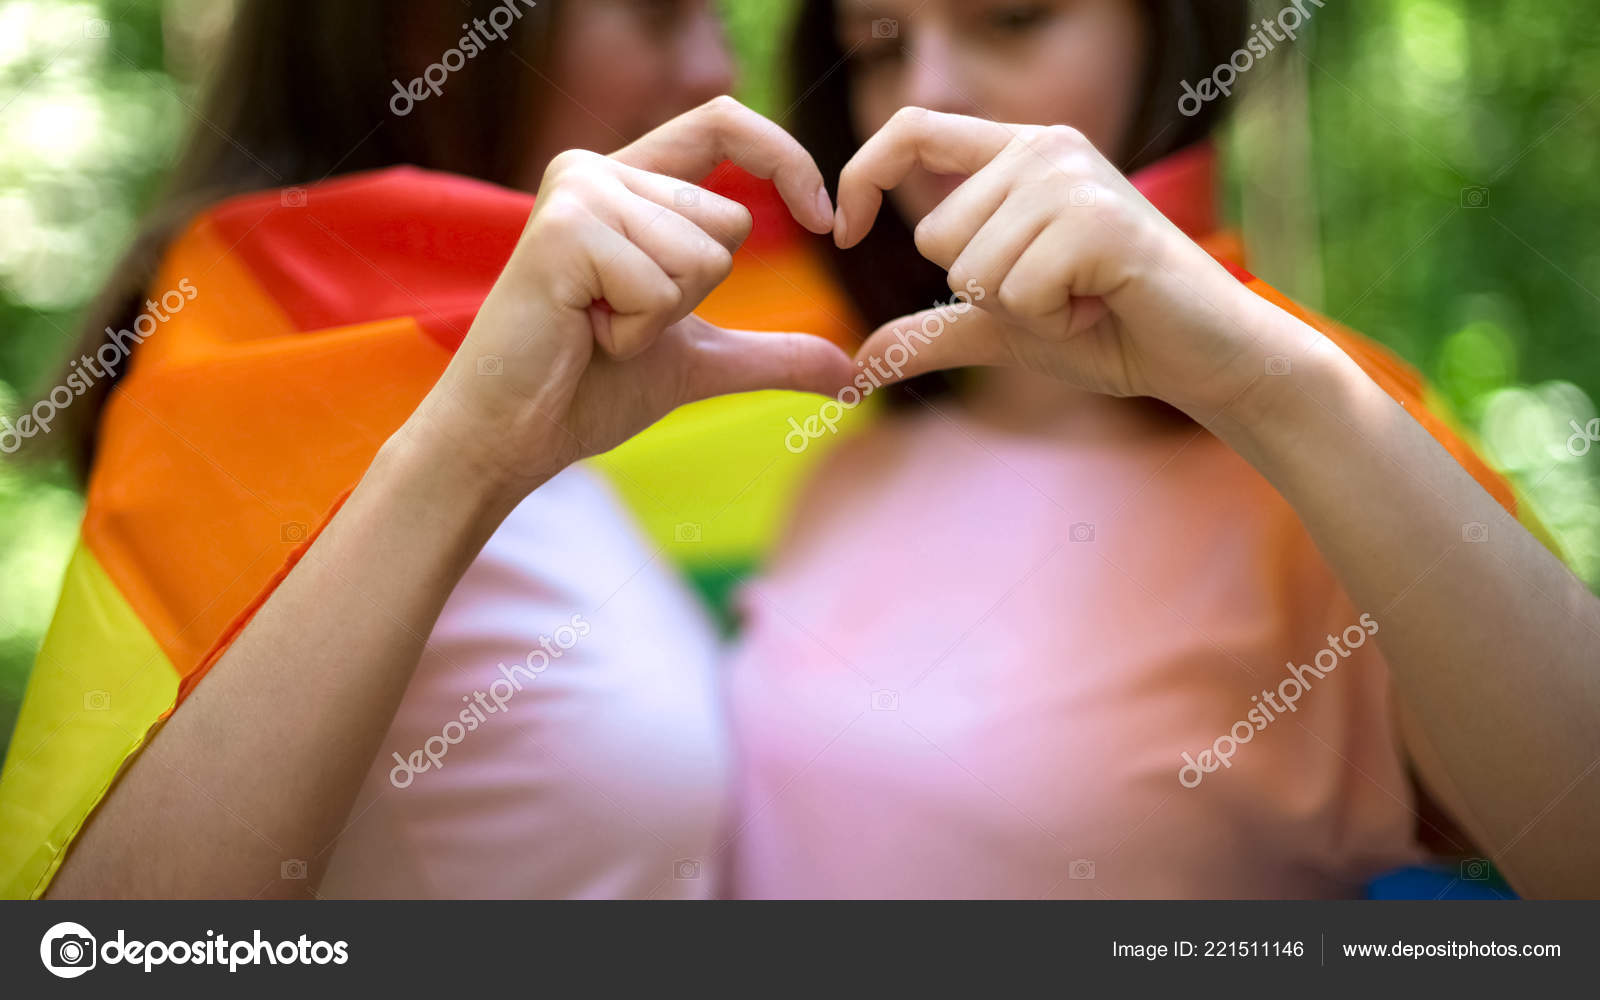 depositphotos_221511146-stock-photo-lesbian-couple-wrapped-rainbow-flag.jpg